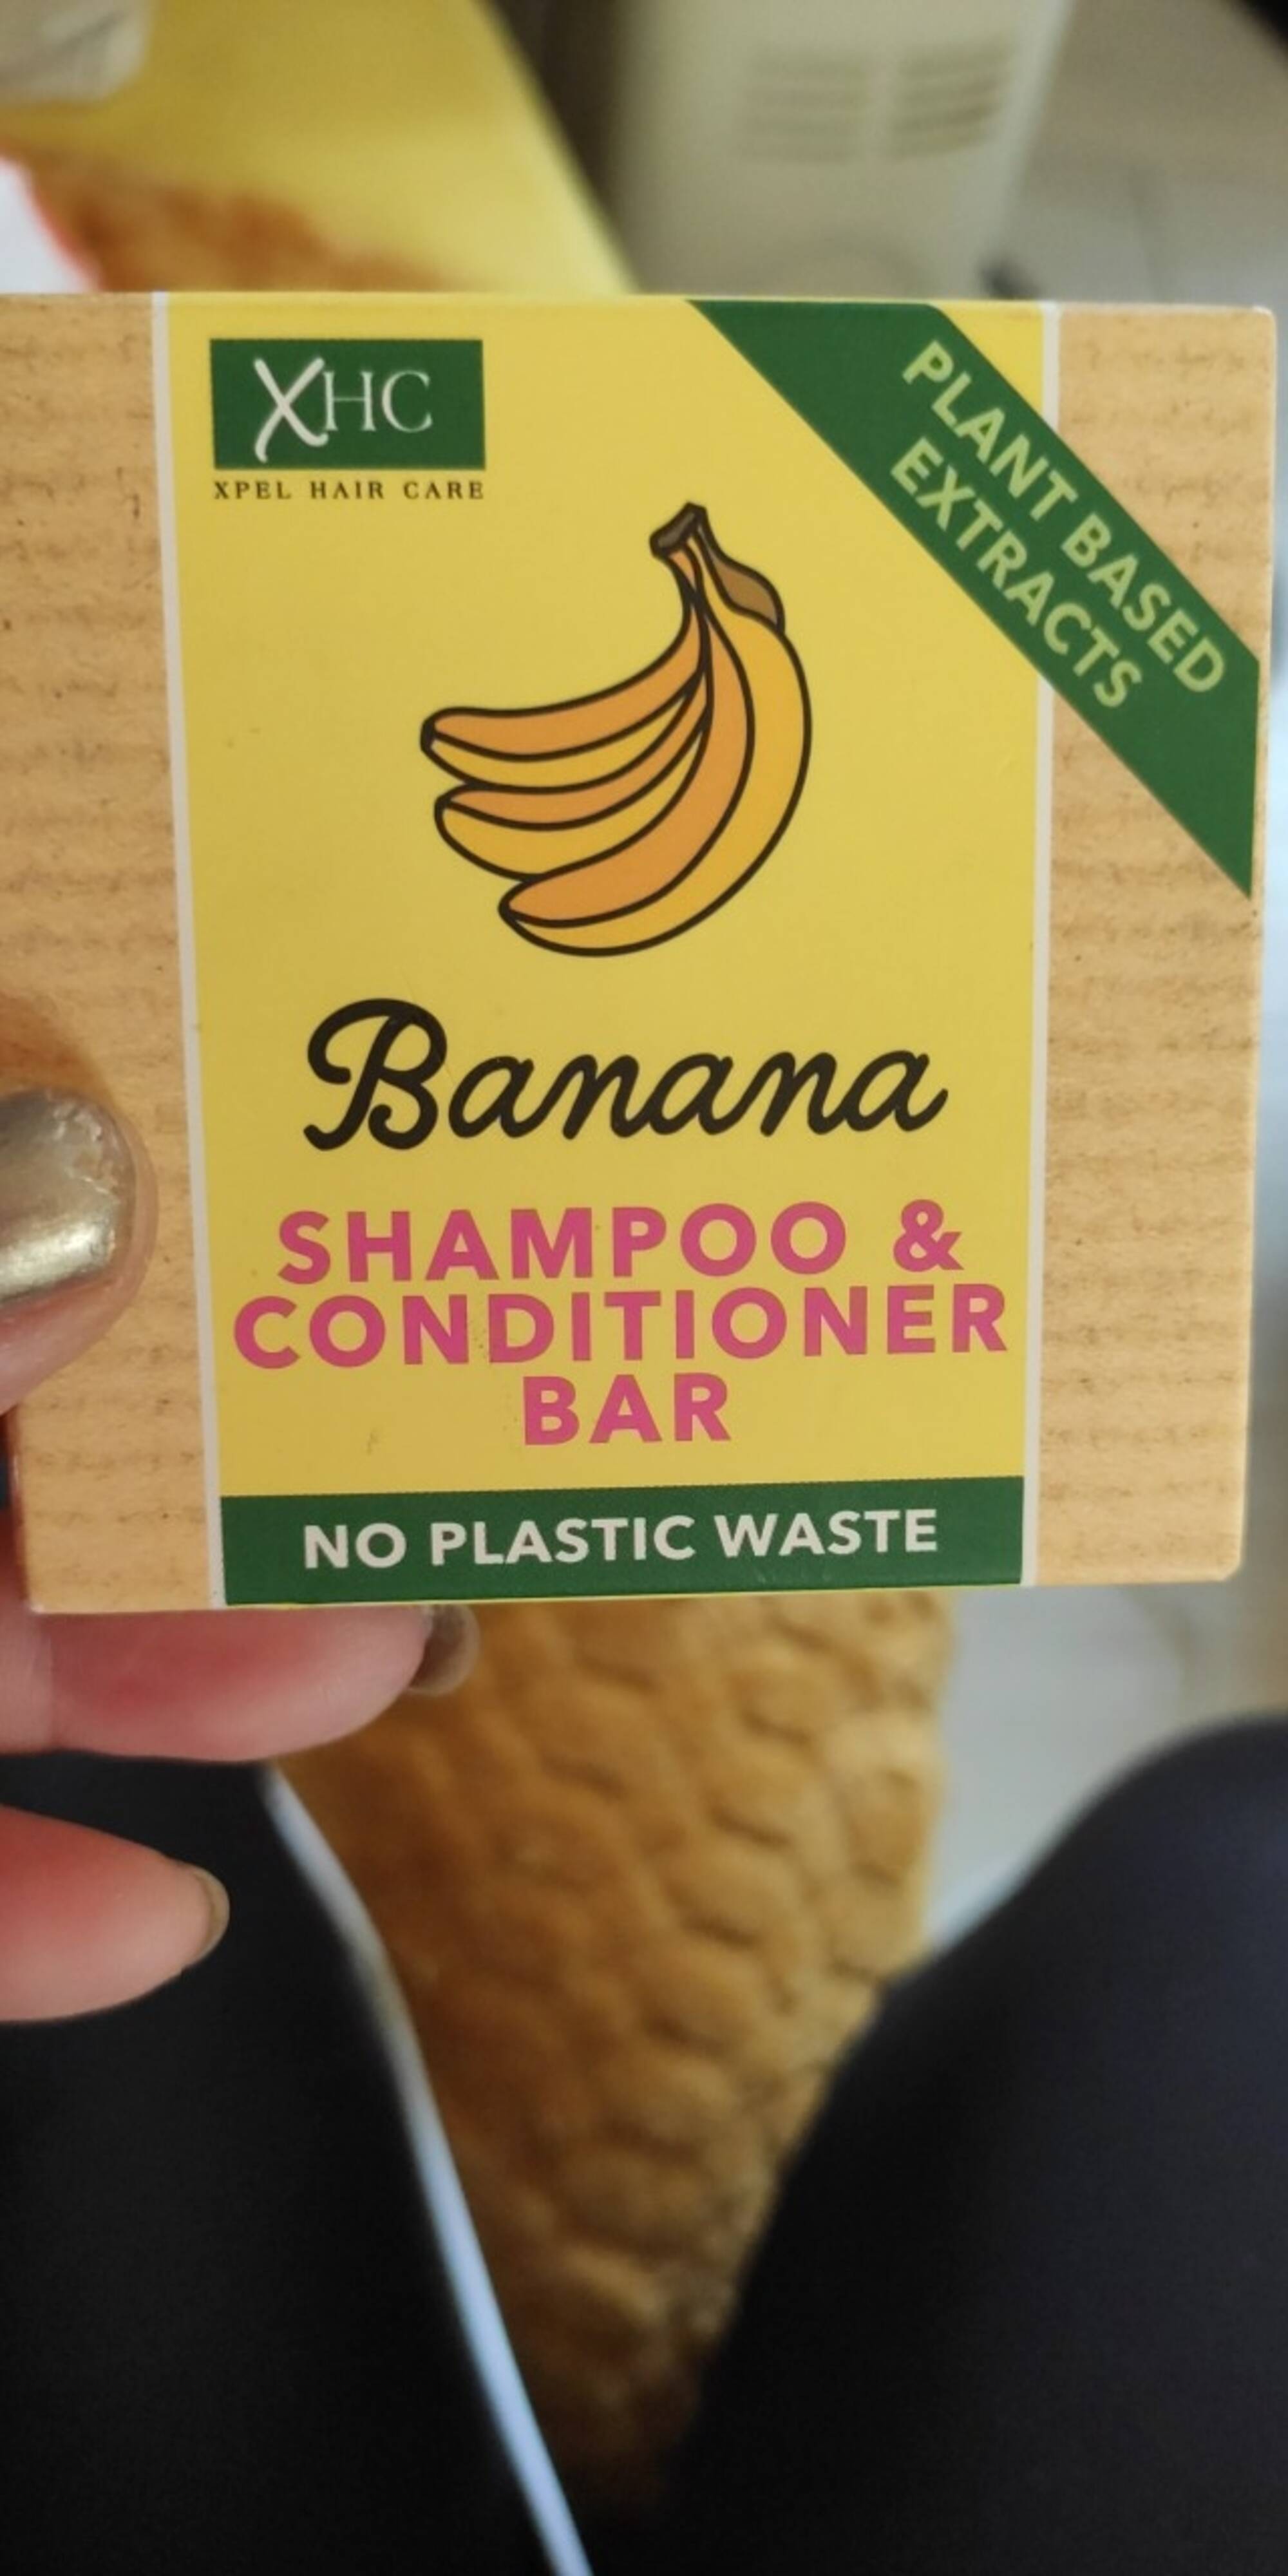 XHC - Banana shampoo & conditioner bar